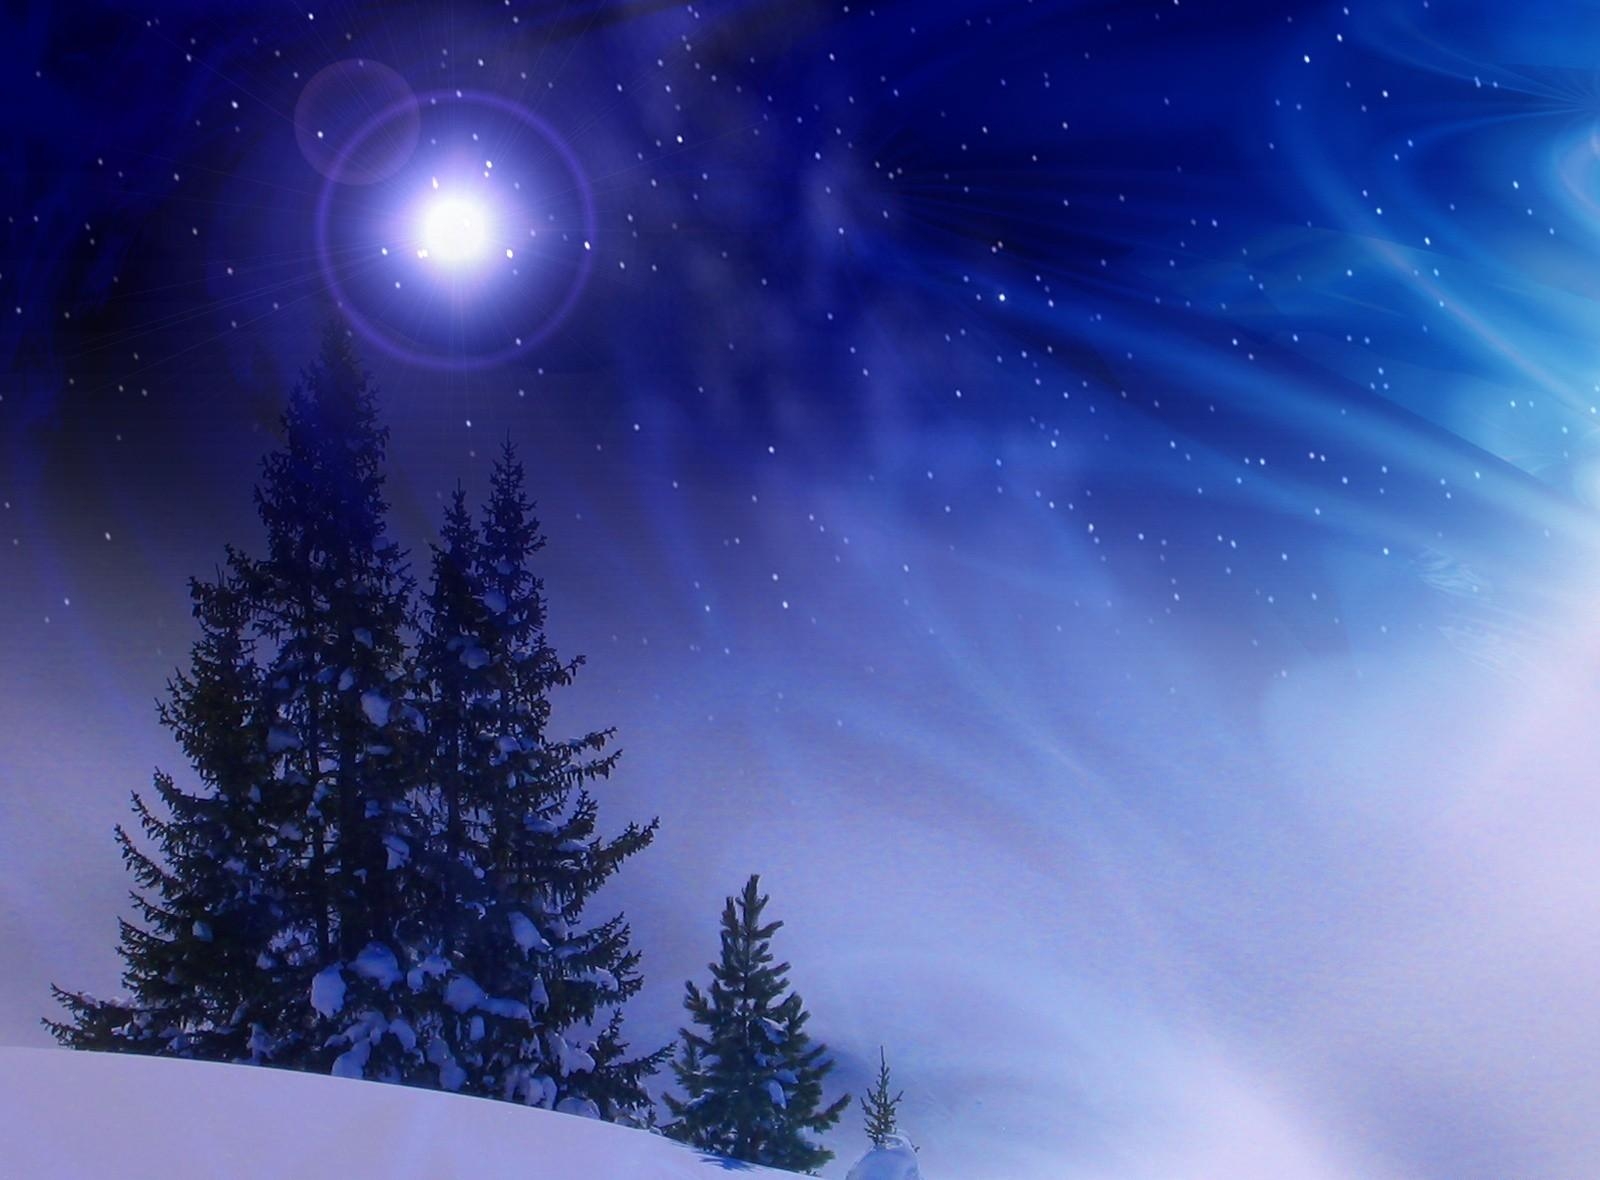 fir trees, holidays, winter, snow, snowstorm, midnight